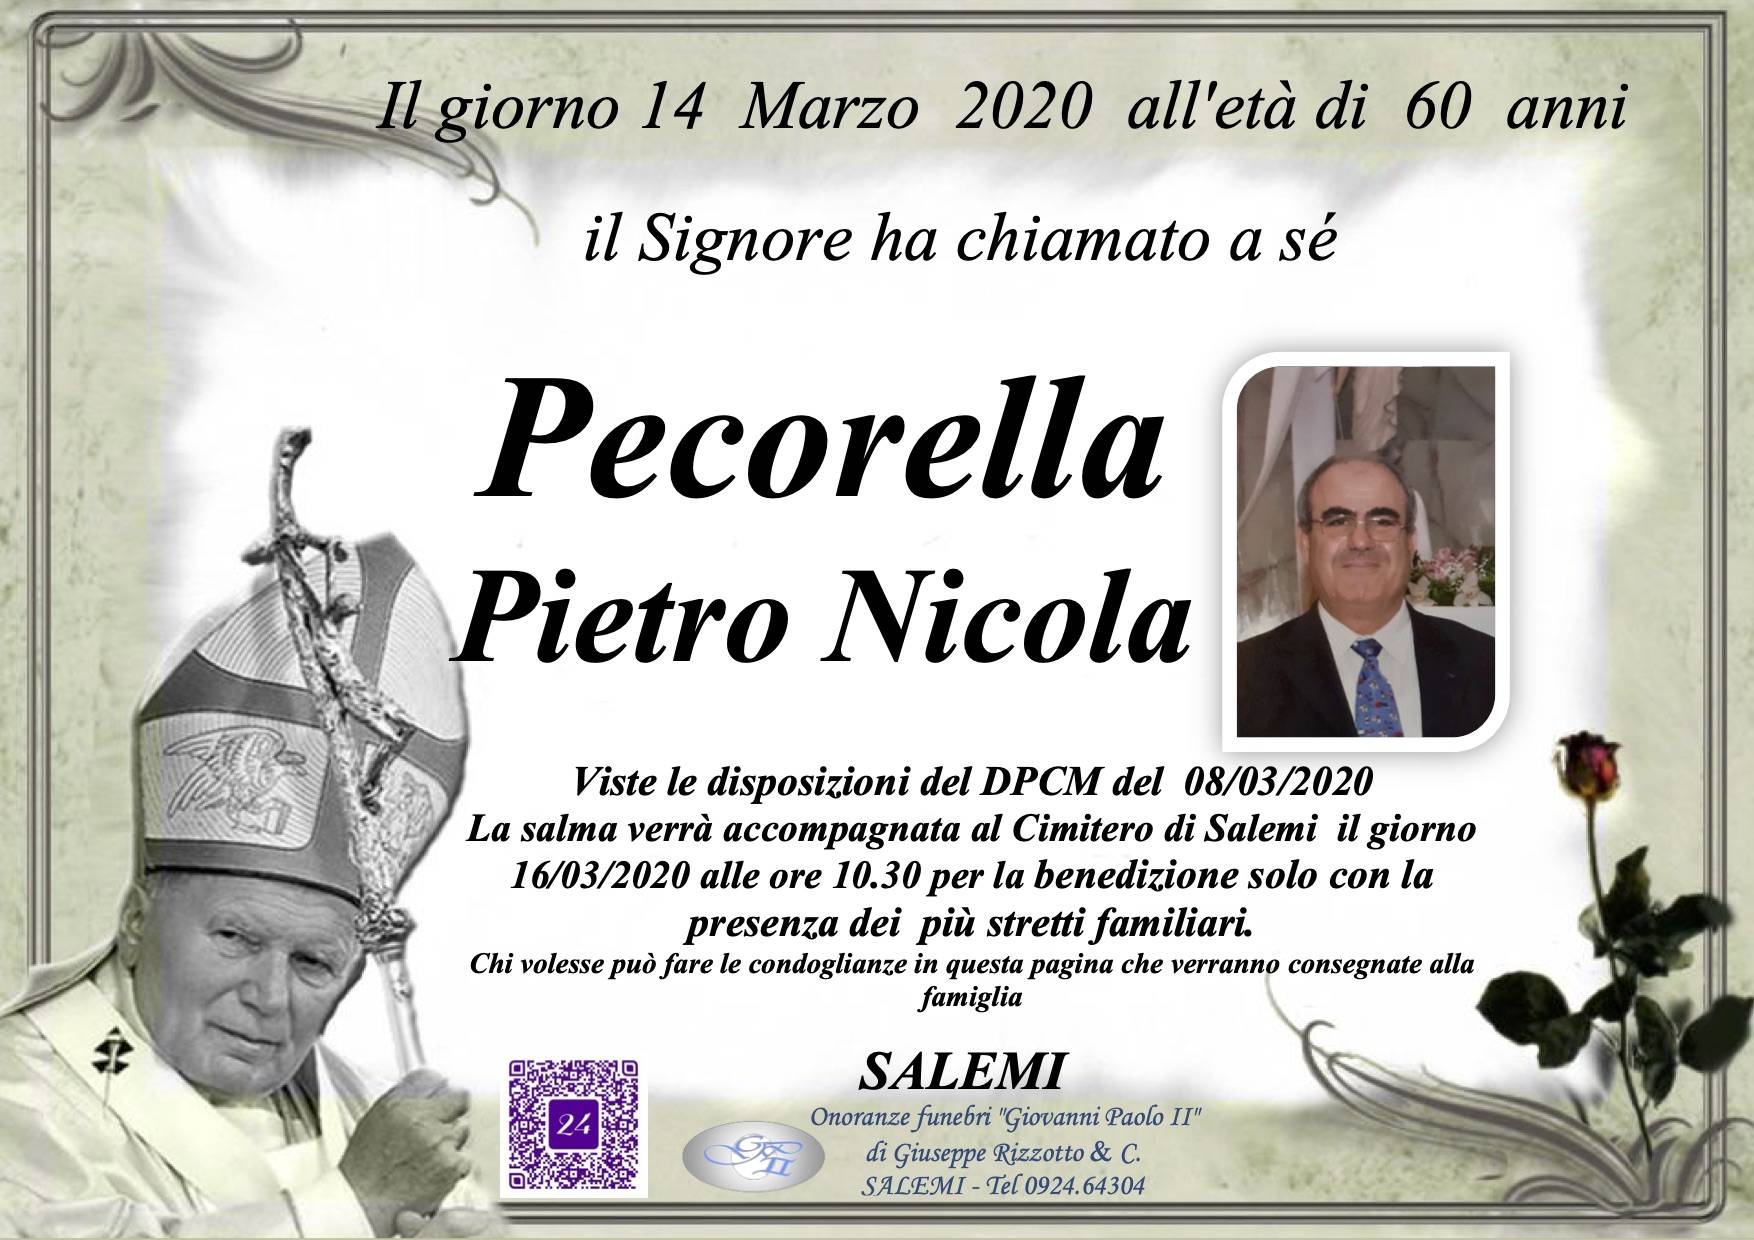 Pietro Nicola Pecorella